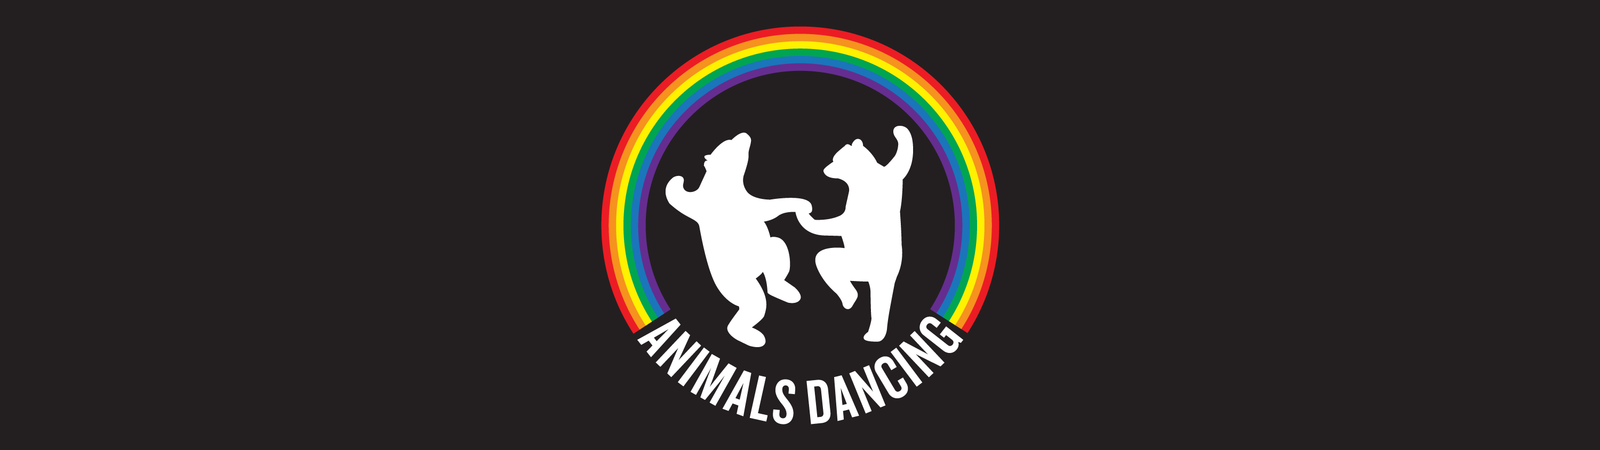 Animals Dancing